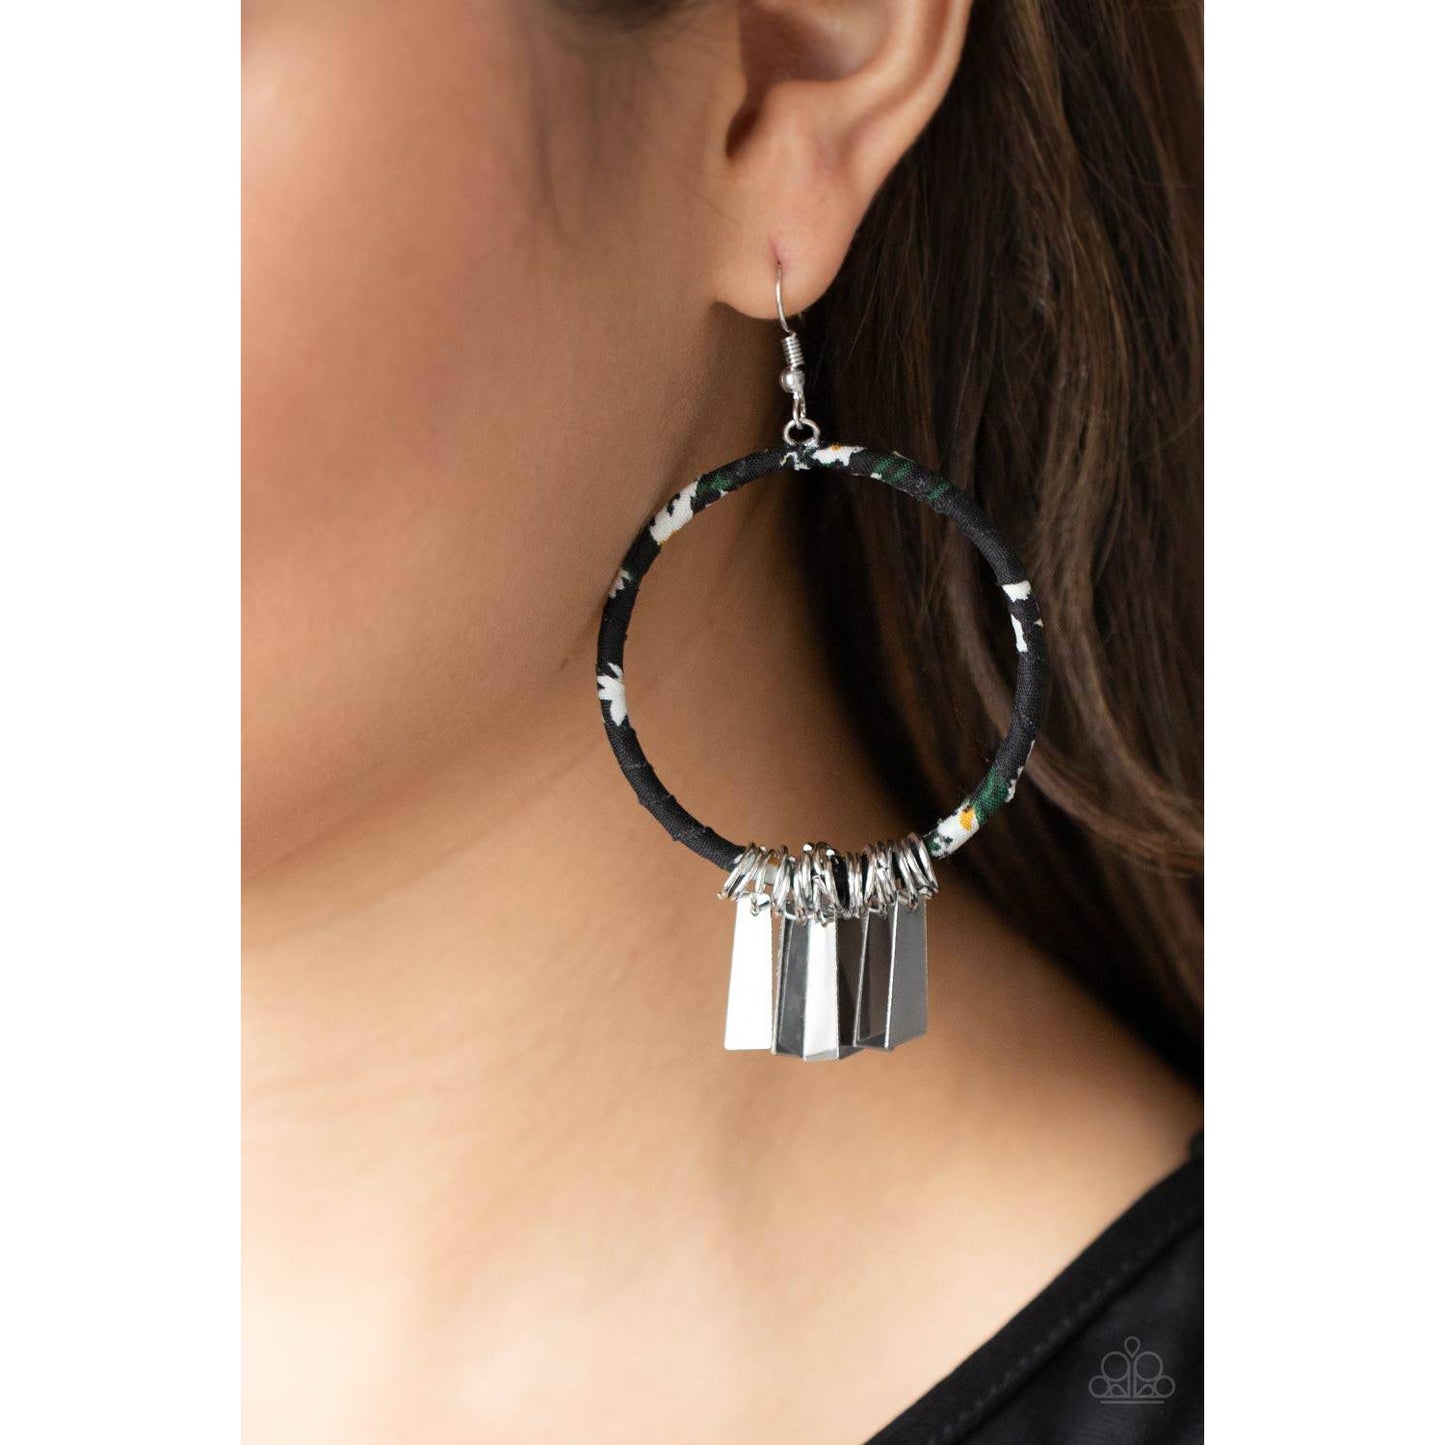 Garden Chimes - Black Earrings - Paparazzi Accessories - GlaMarous Titi Jewels